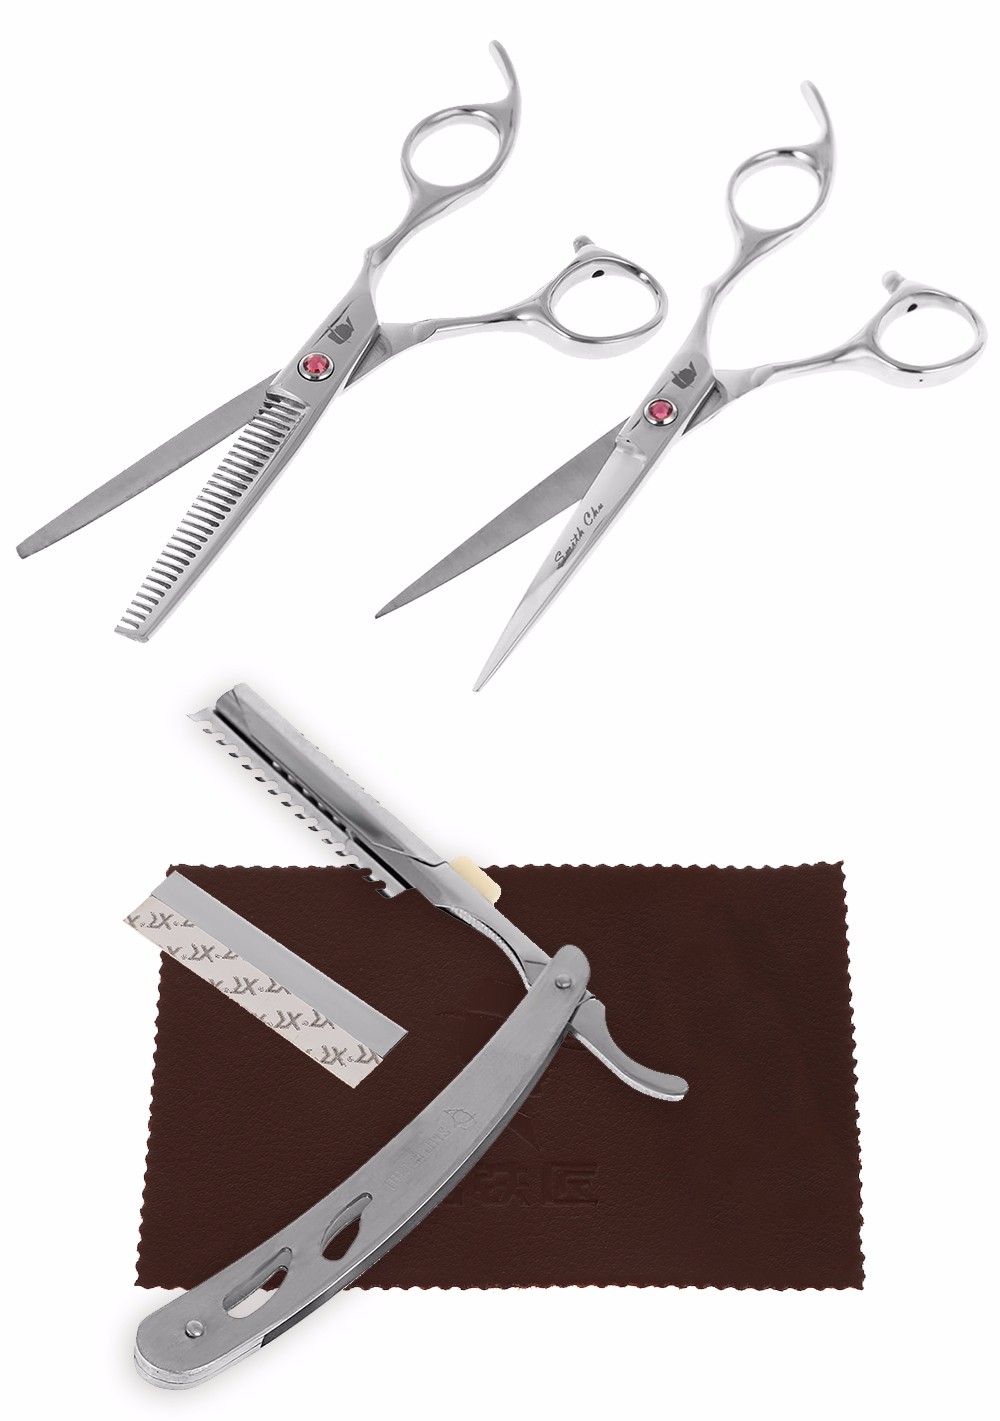 Professional Hair Scissors Set Hairdressing Tools